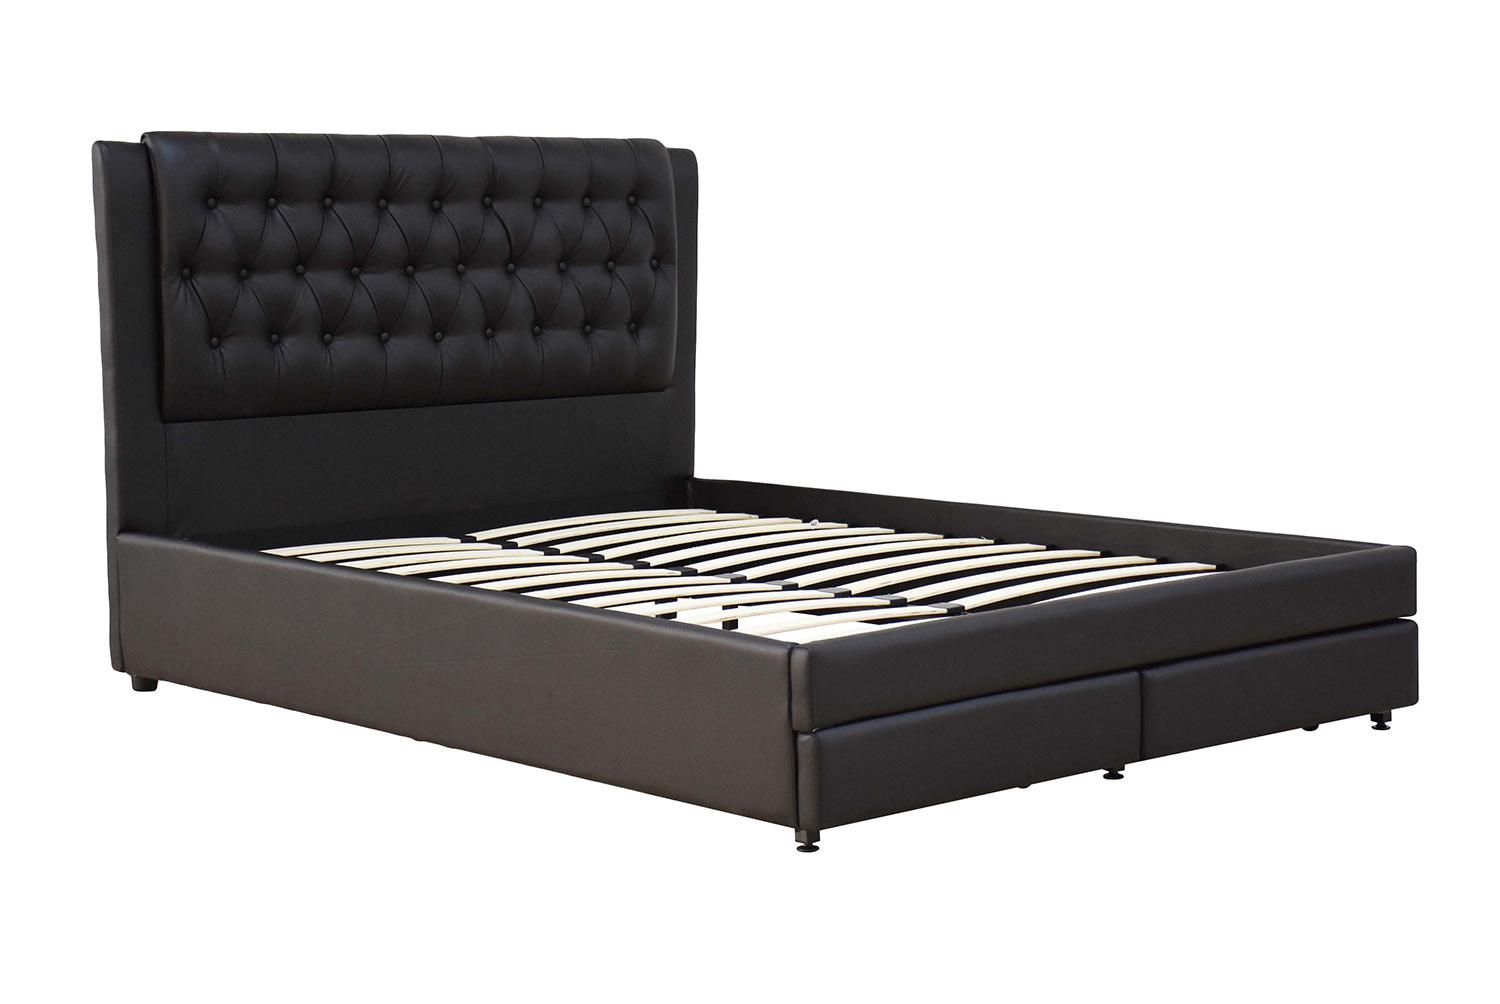 Acme Wibier Queen Bed with Storage - Espresso Vinyl